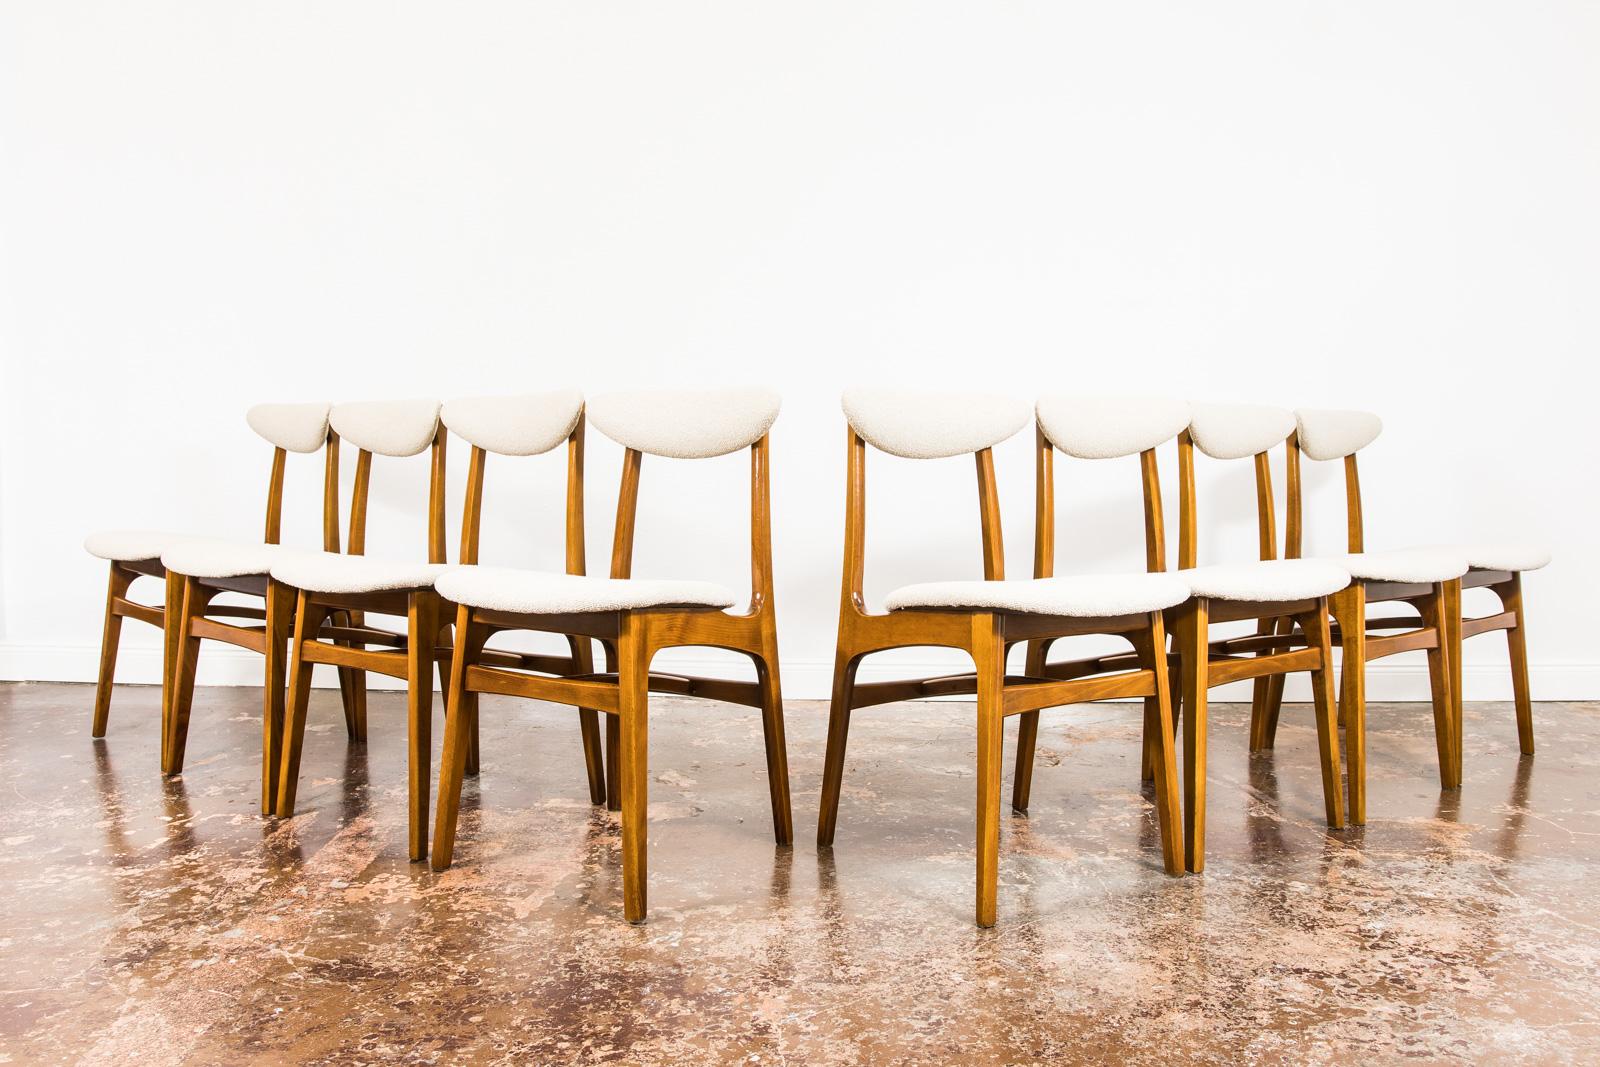 Set of 8 Beige Restored Vintage Chairs by Rajmund Teofil Halas, 1960's, Poland.

Set of 8 chairs 